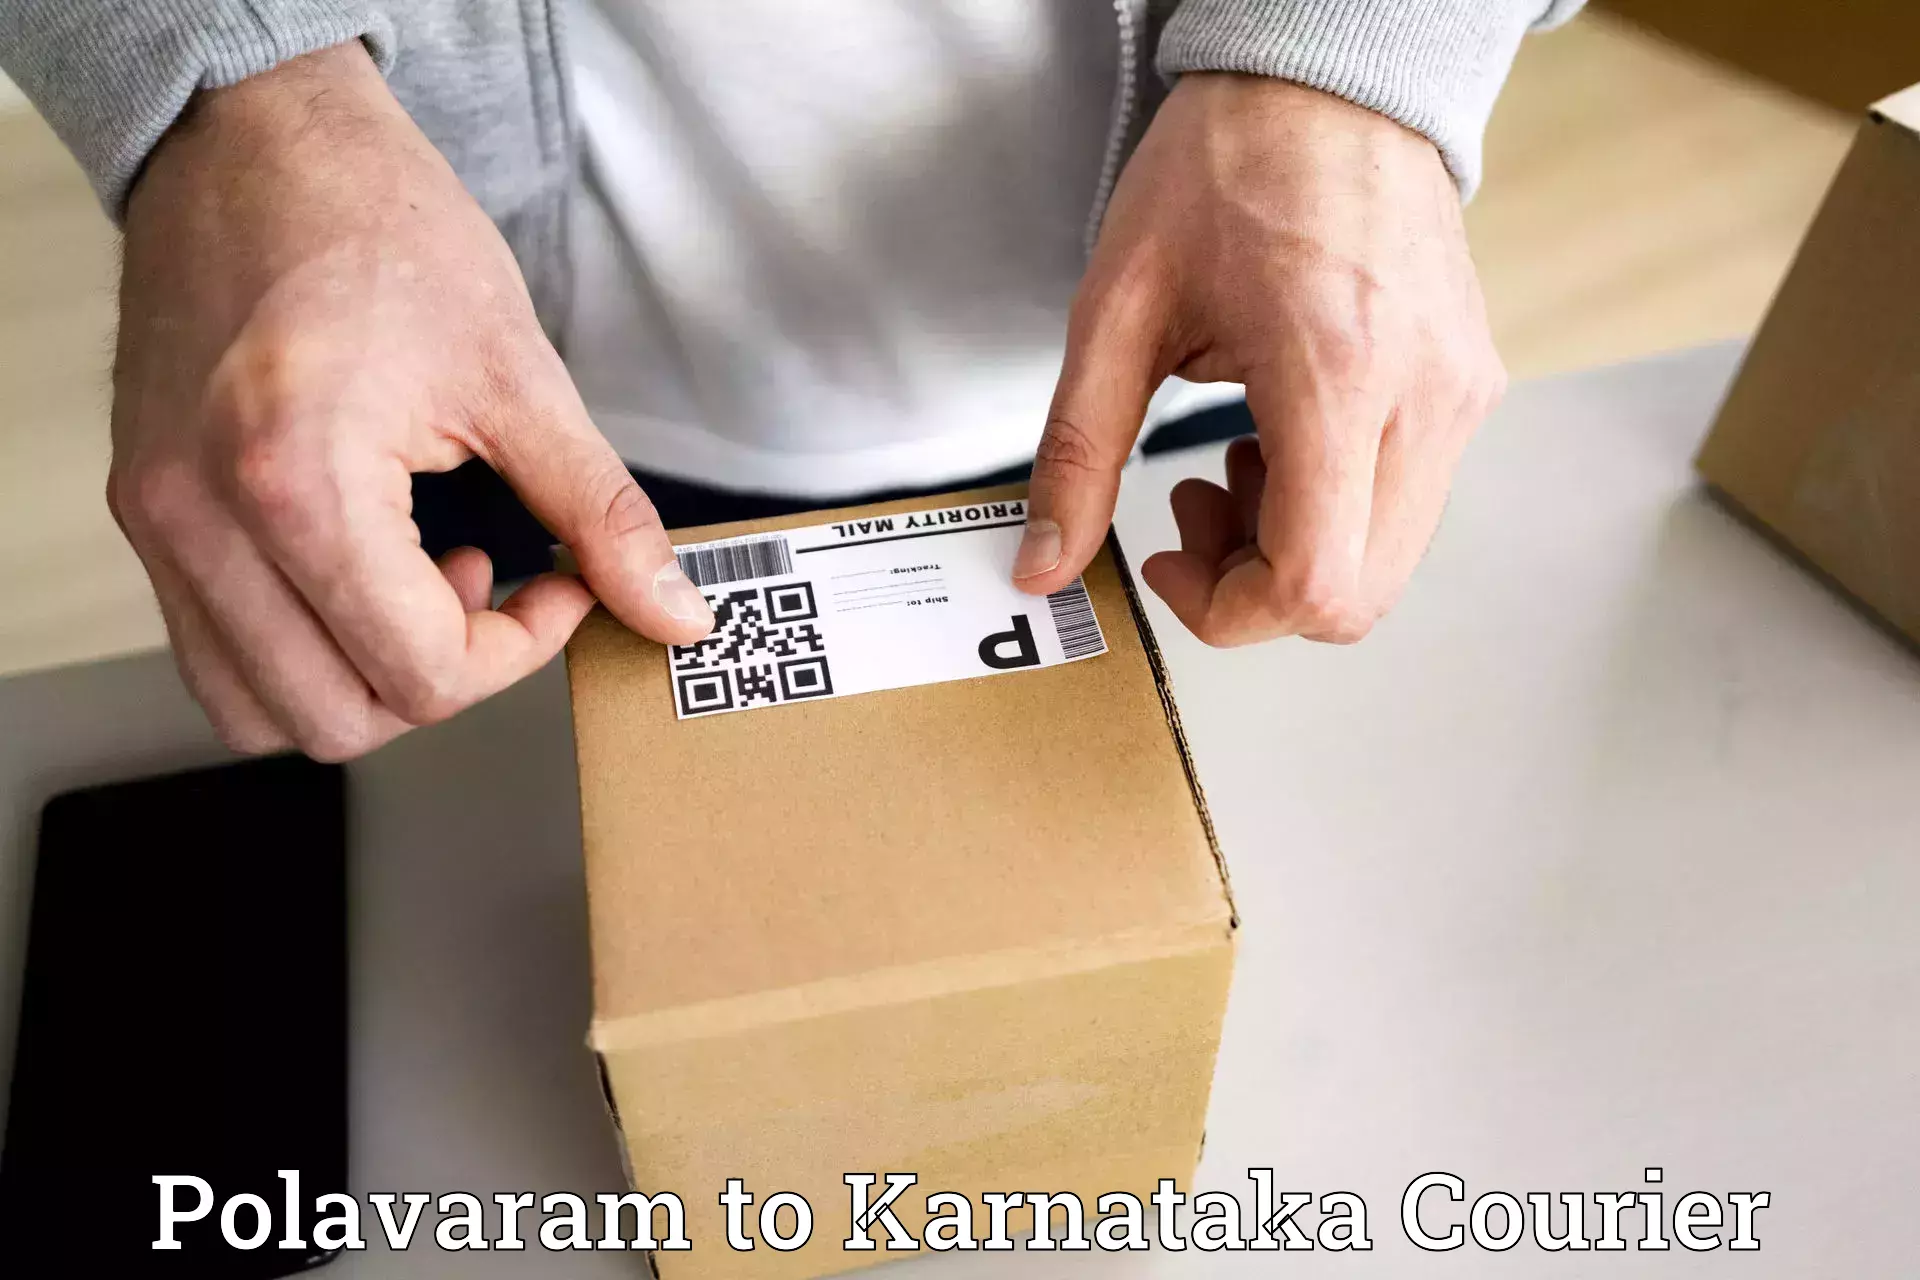 Local delivery service Polavaram to Madikeri